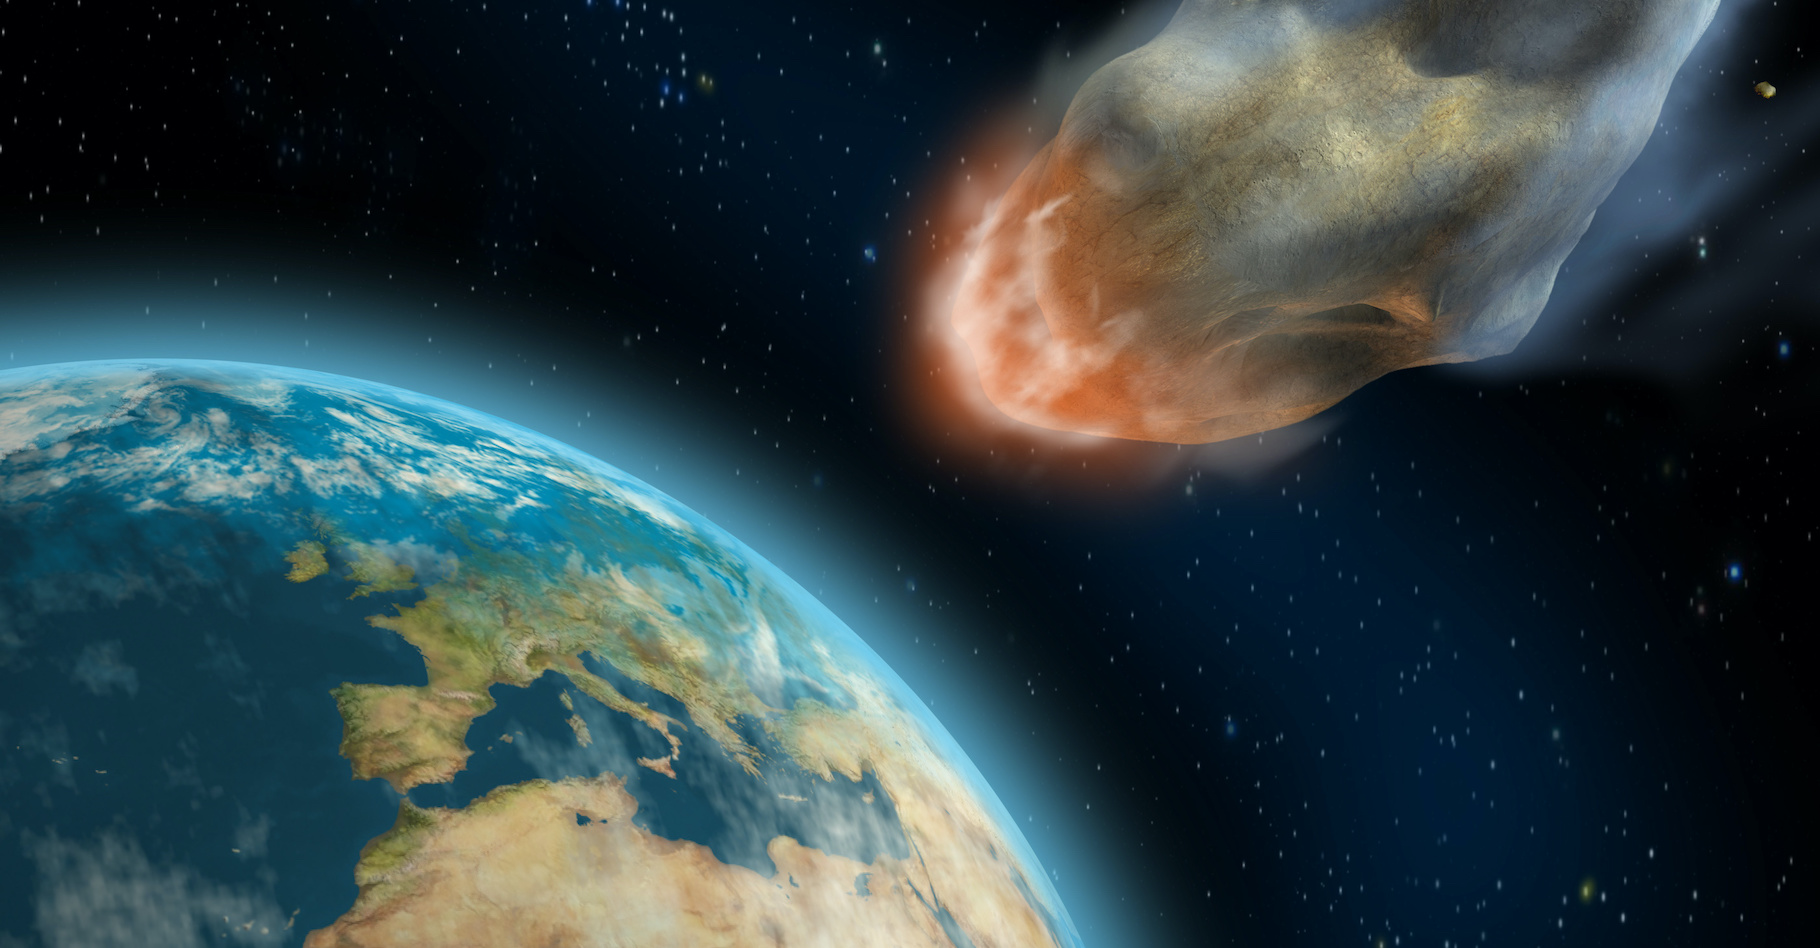 La collision d'un grand astéroïde, de diamètre supérieur à 140 mètres, avec la Terre&nbsp;est heureusement très peu probable.&nbsp;© Andrea Danti, Adobe Stock